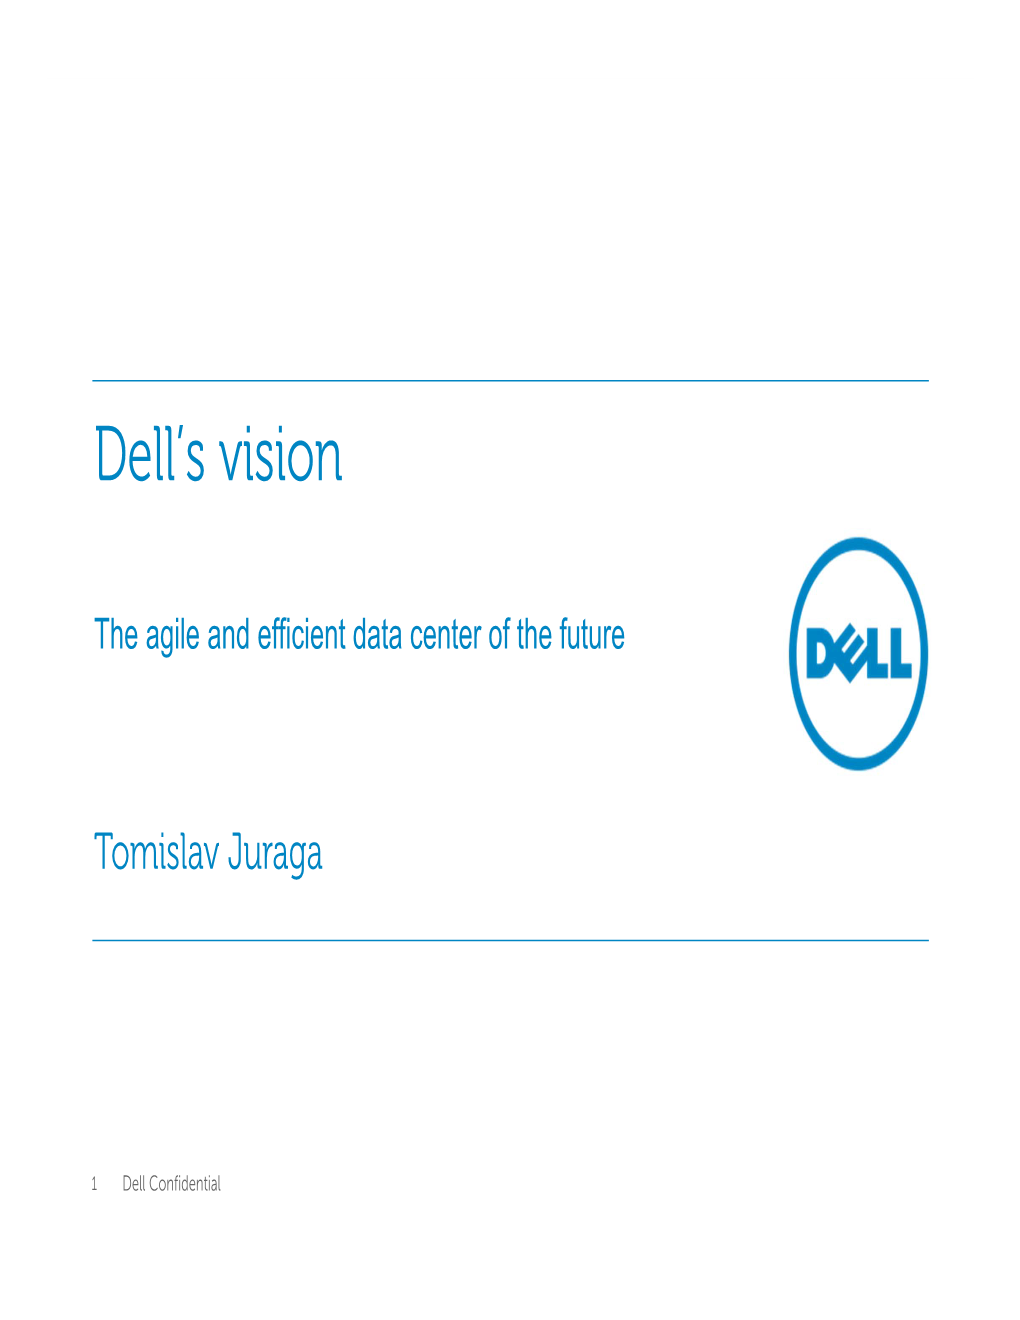 Dell's Vision